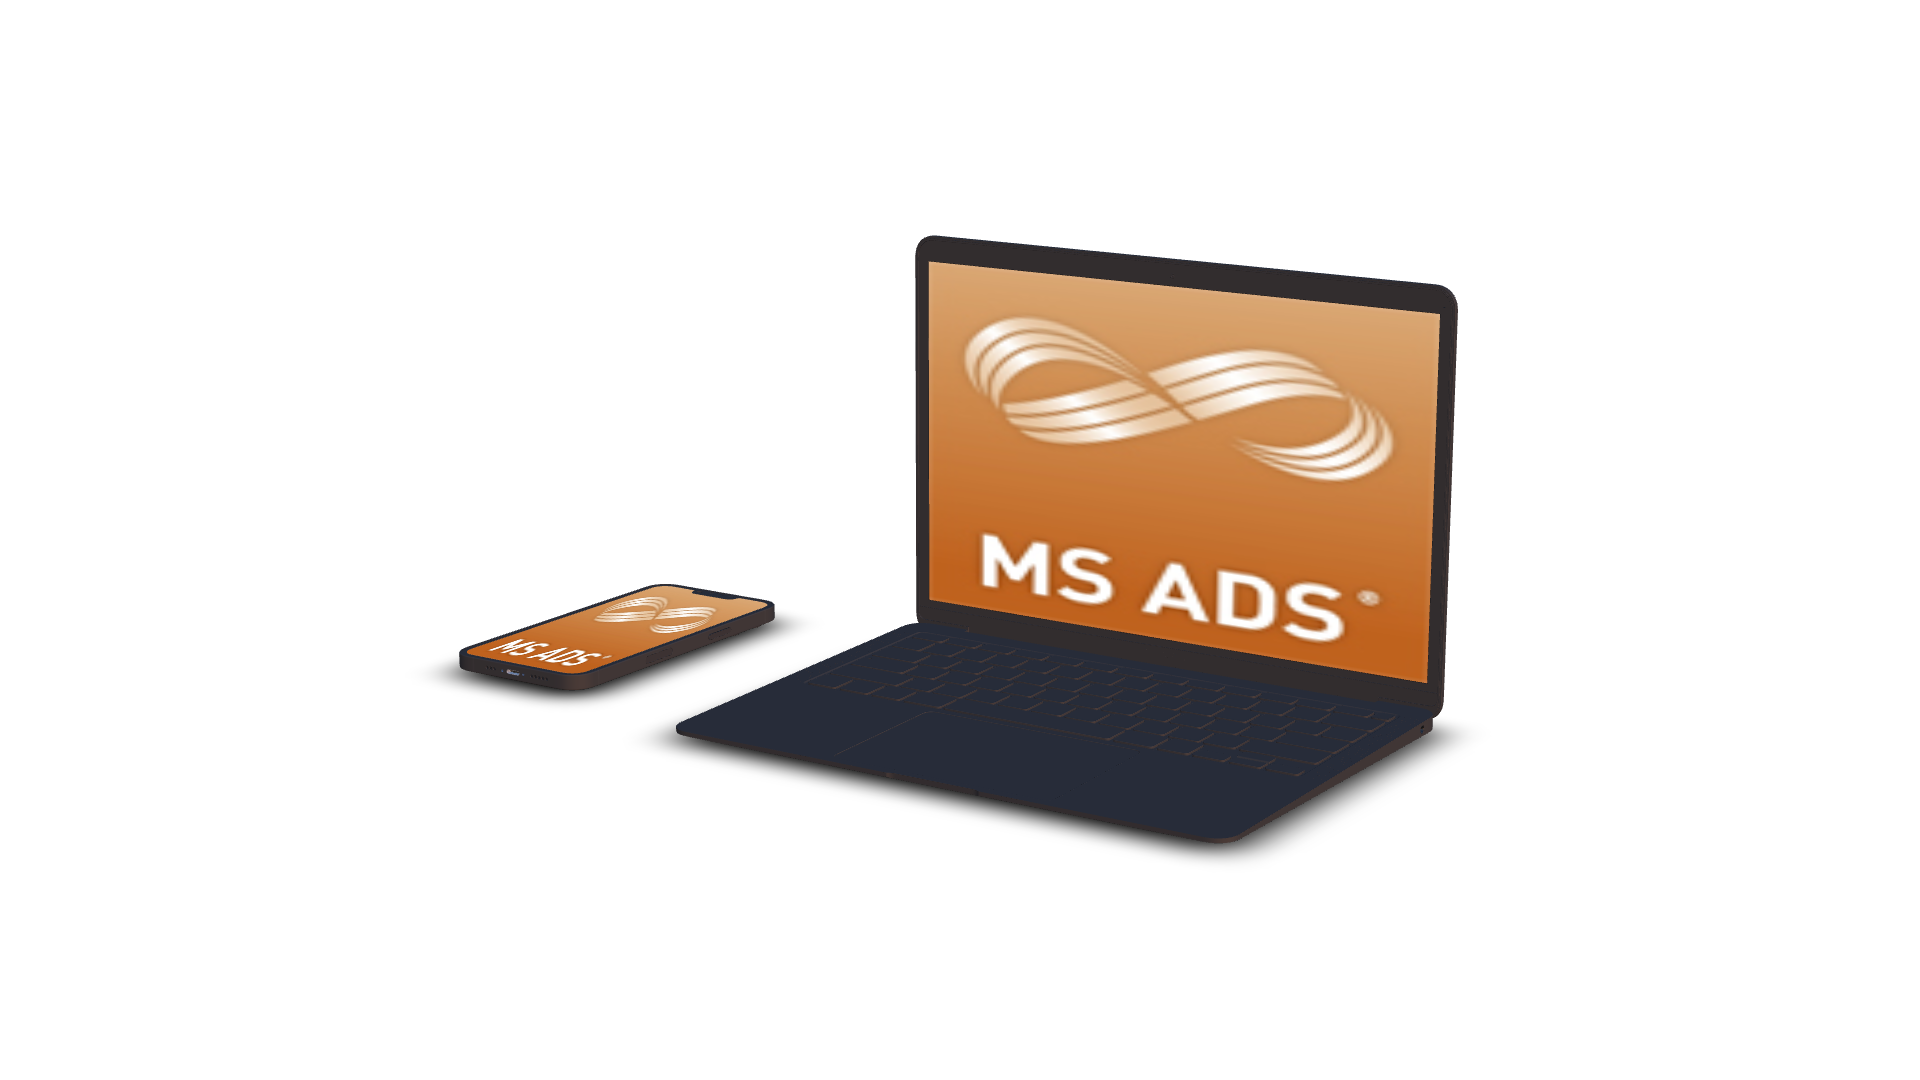 MS MDS, MS QF GmbH, Qualitätsmanagement Software, Zertifizierung Software, Prozessmanagement Software, MS LDS, MS ADS, 